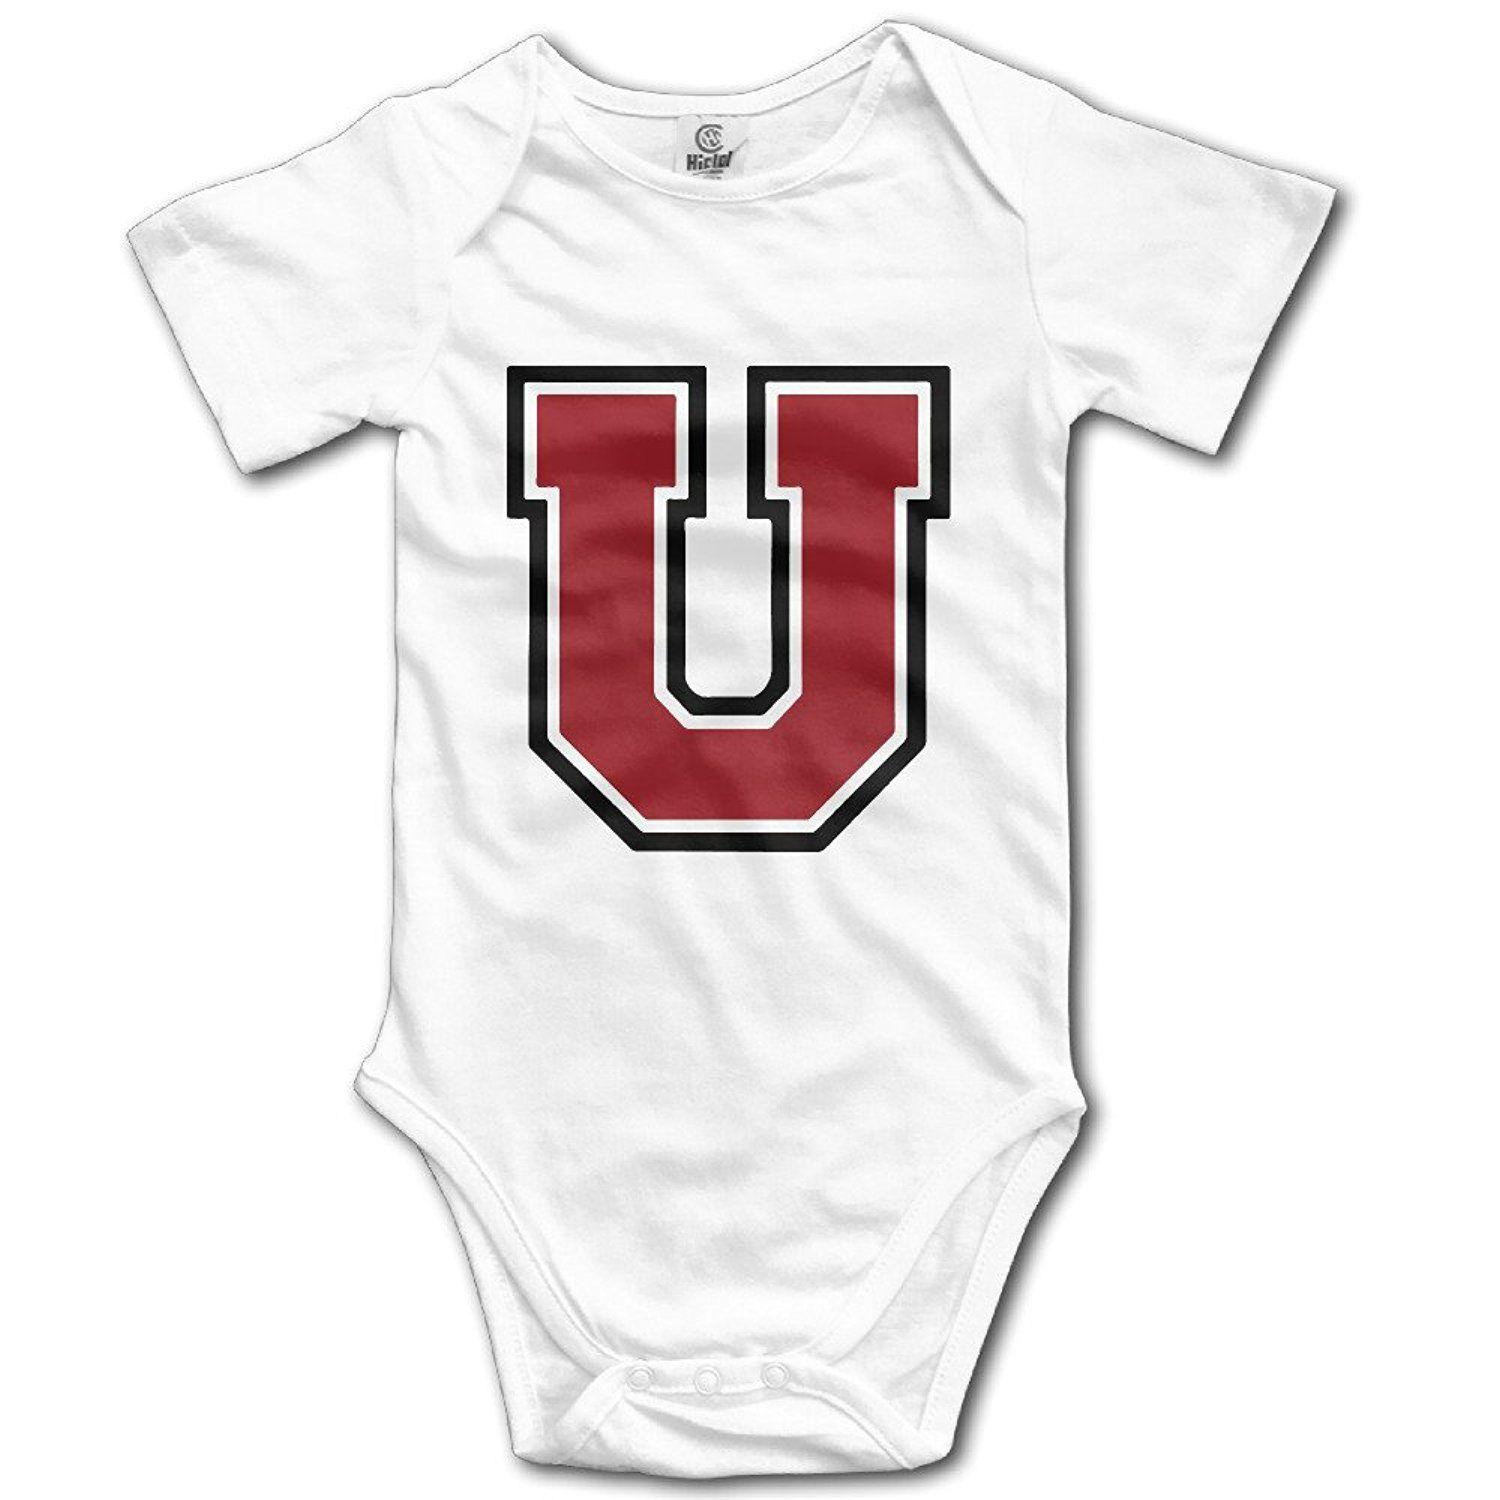 Union College Dutchmen Logo - Buy Baby Boys Union College Dutchmen 1 Logo Romper Jumpsuit Bodysuit